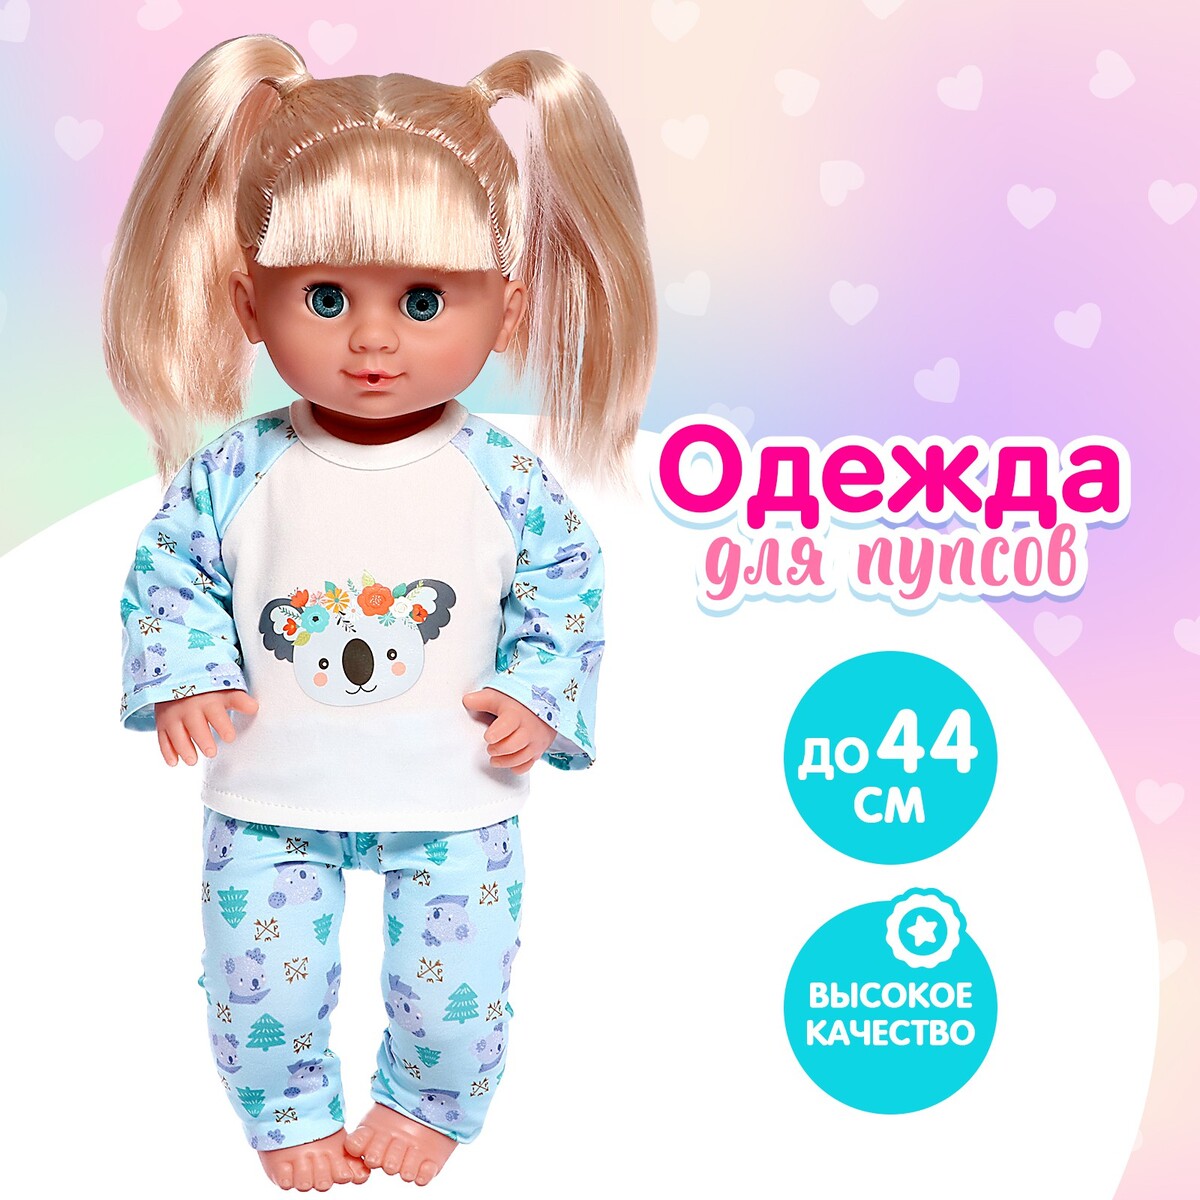 Пижама для кукол 40-44 см, 2 вещи, текстиль, на липучках чувства и вещи